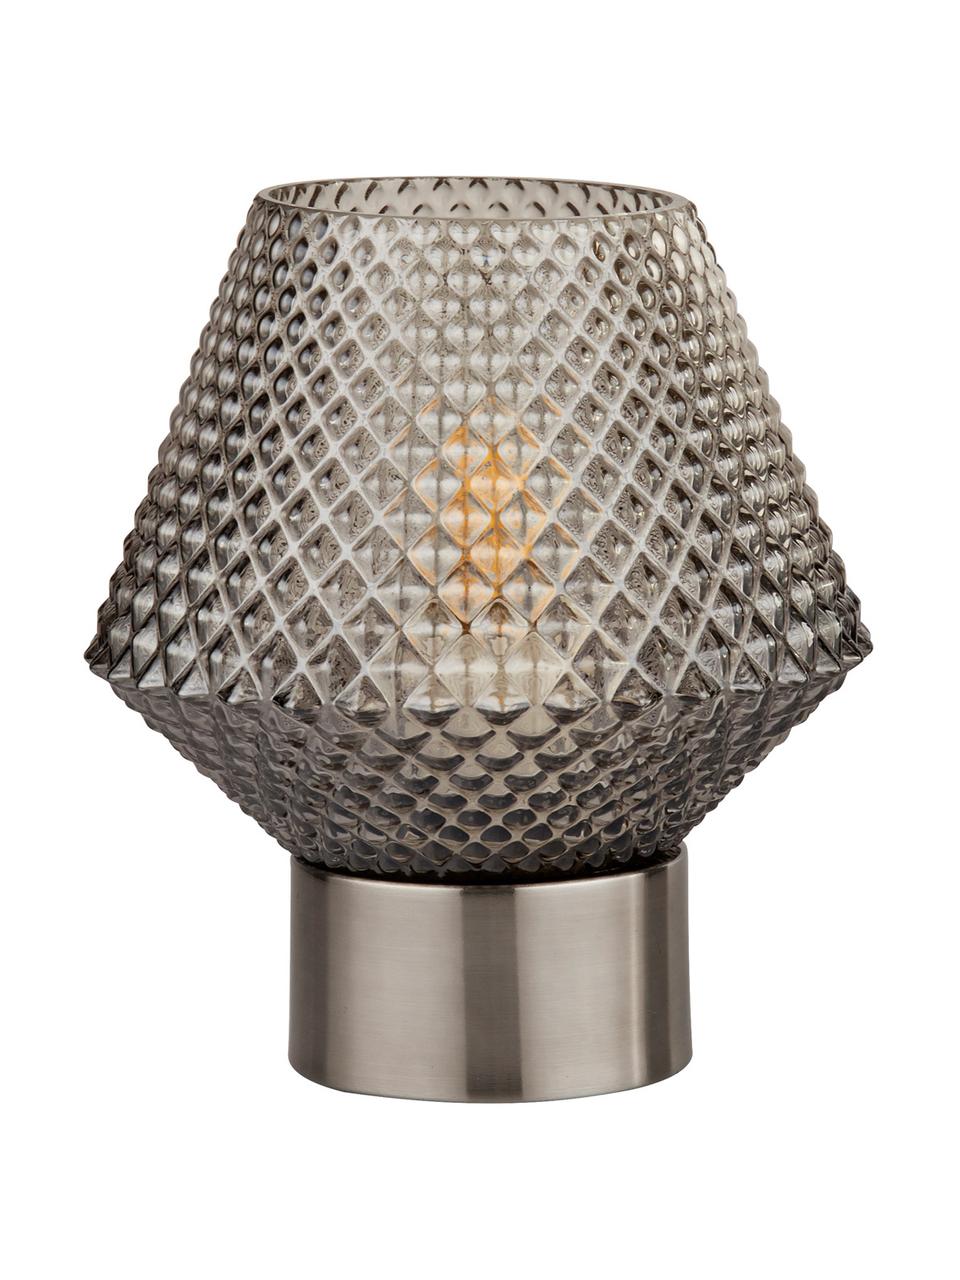 Kleine tafellamp Luisville van glas, Voetstuk: gecoat staal, Lampenkap: glas, Grijs, Ø 15 x H 18 cm